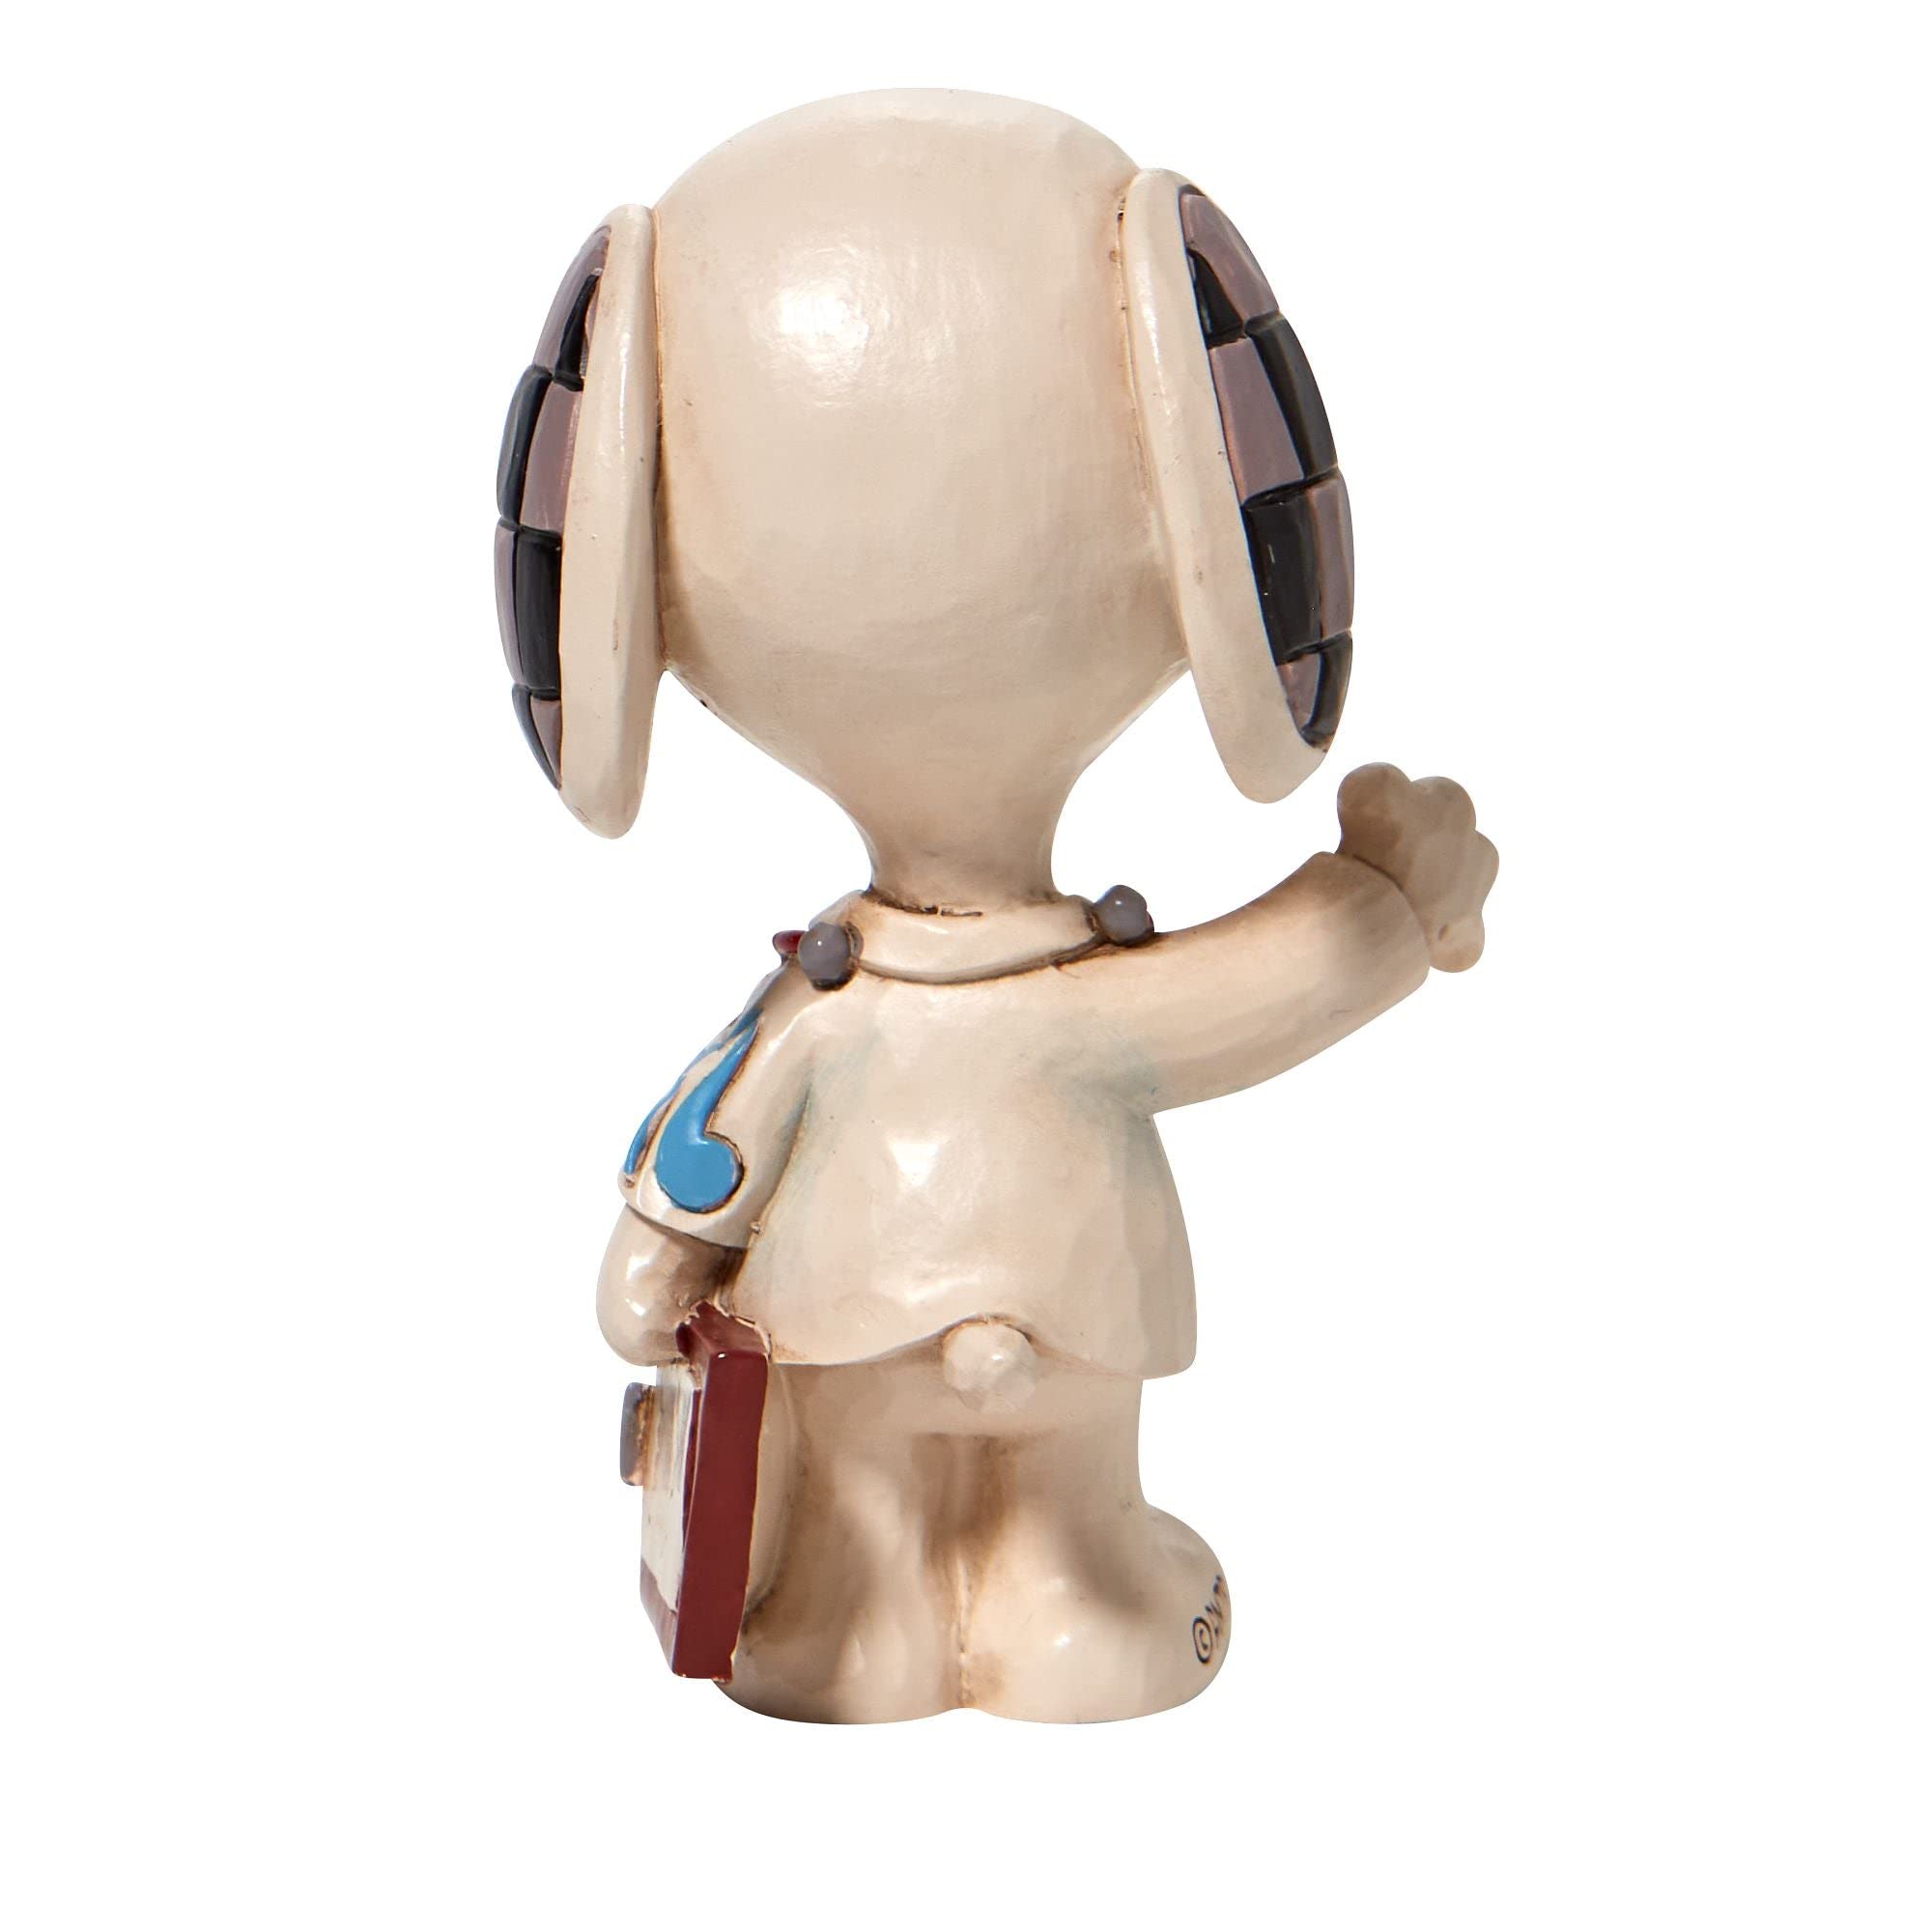 Enesco Jim Shore Peanuts Snoopy Medical Professional Miniature Figurine, 3 Inch, Multicolor